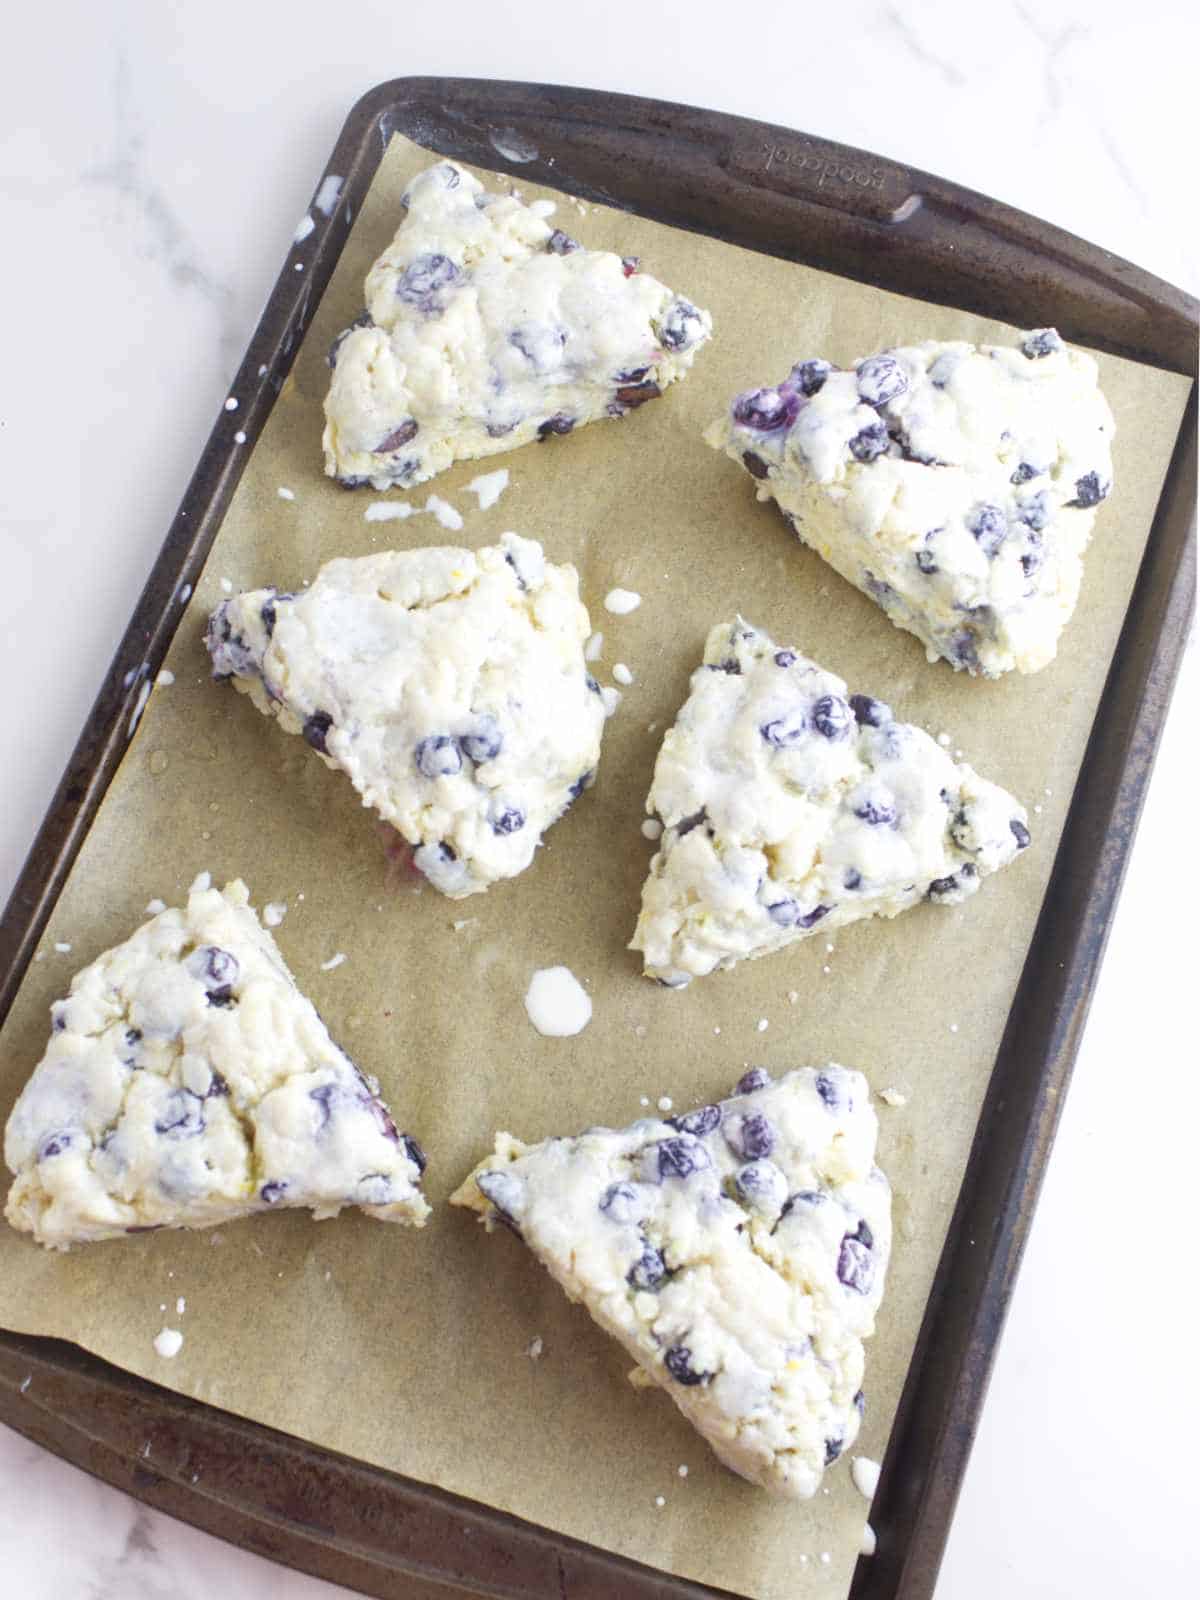 cream brushed scone wedges on a baking sheet.